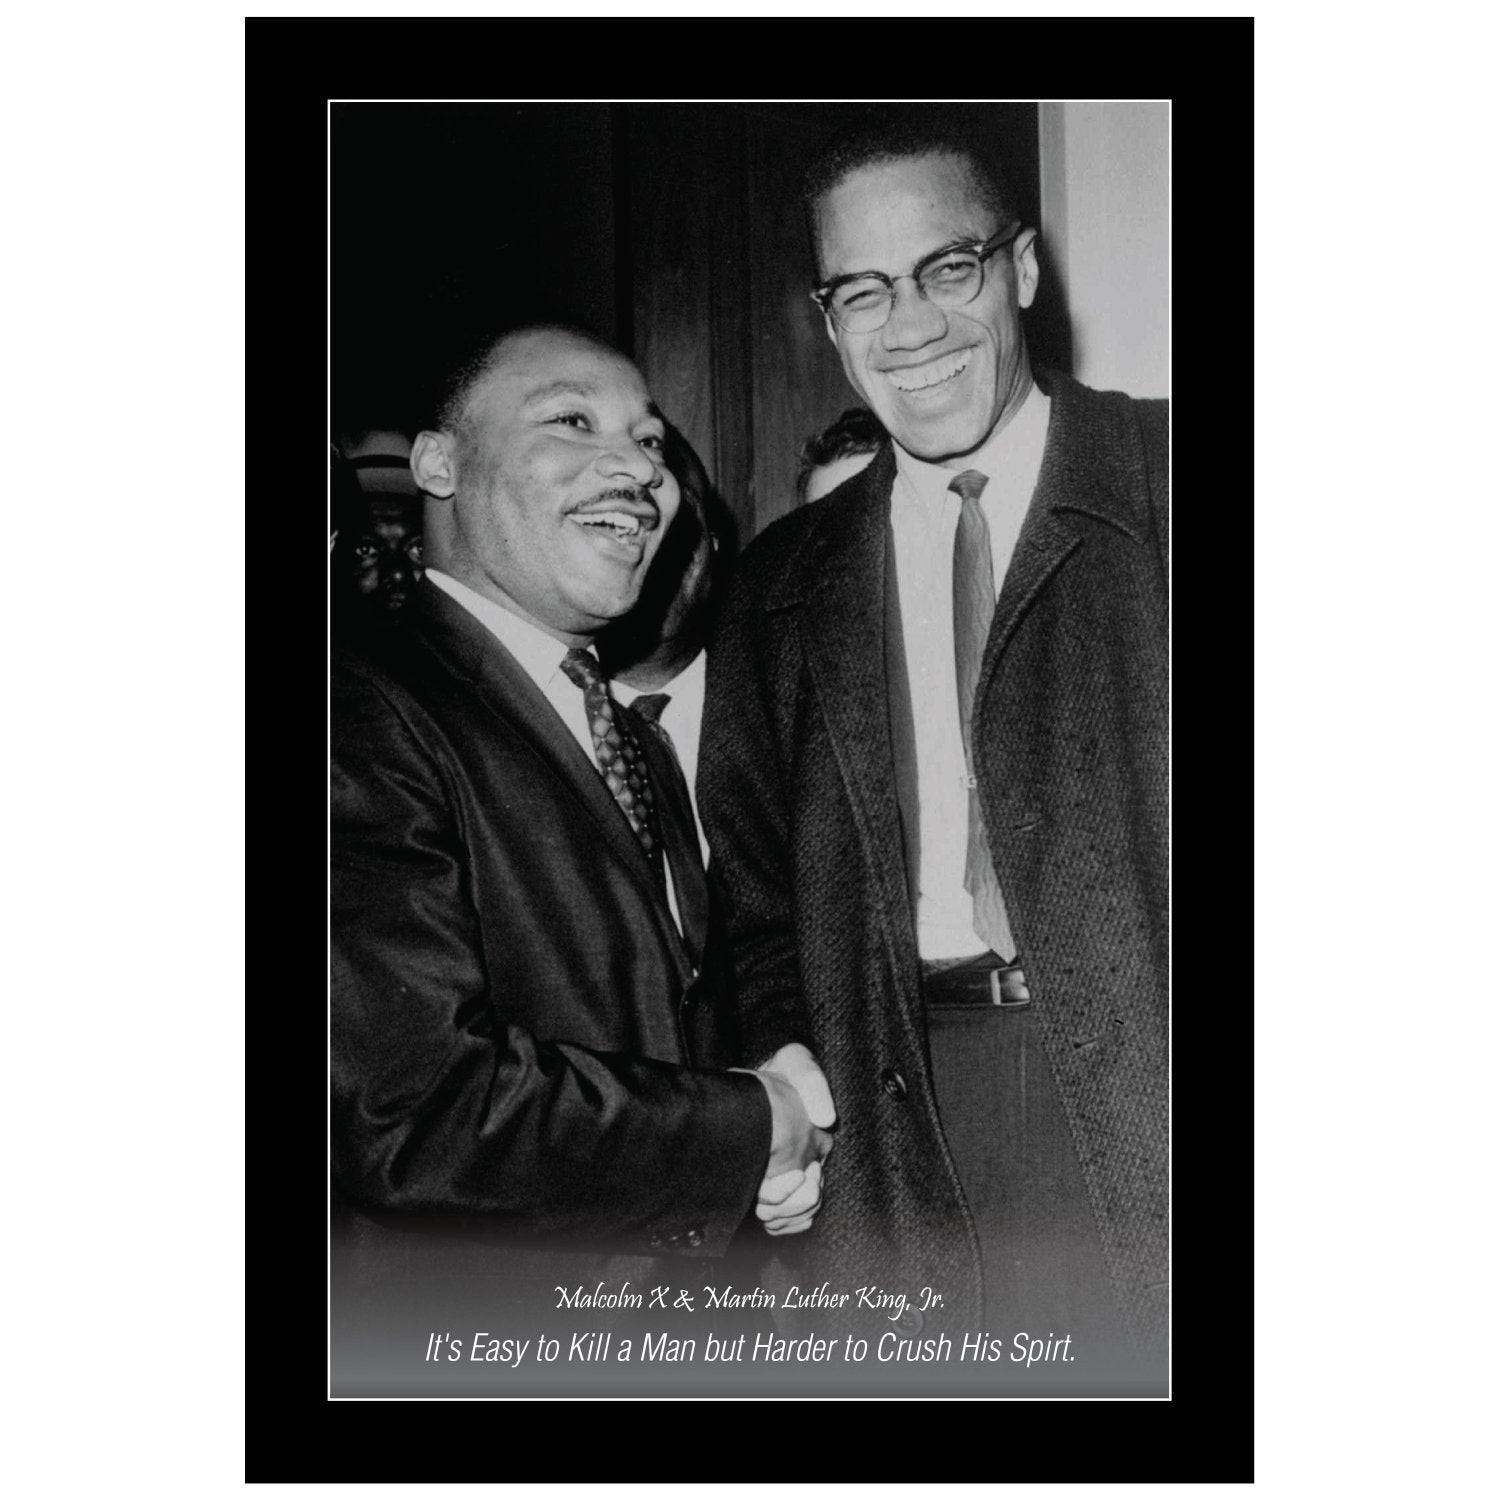 Malcolm X and Martin